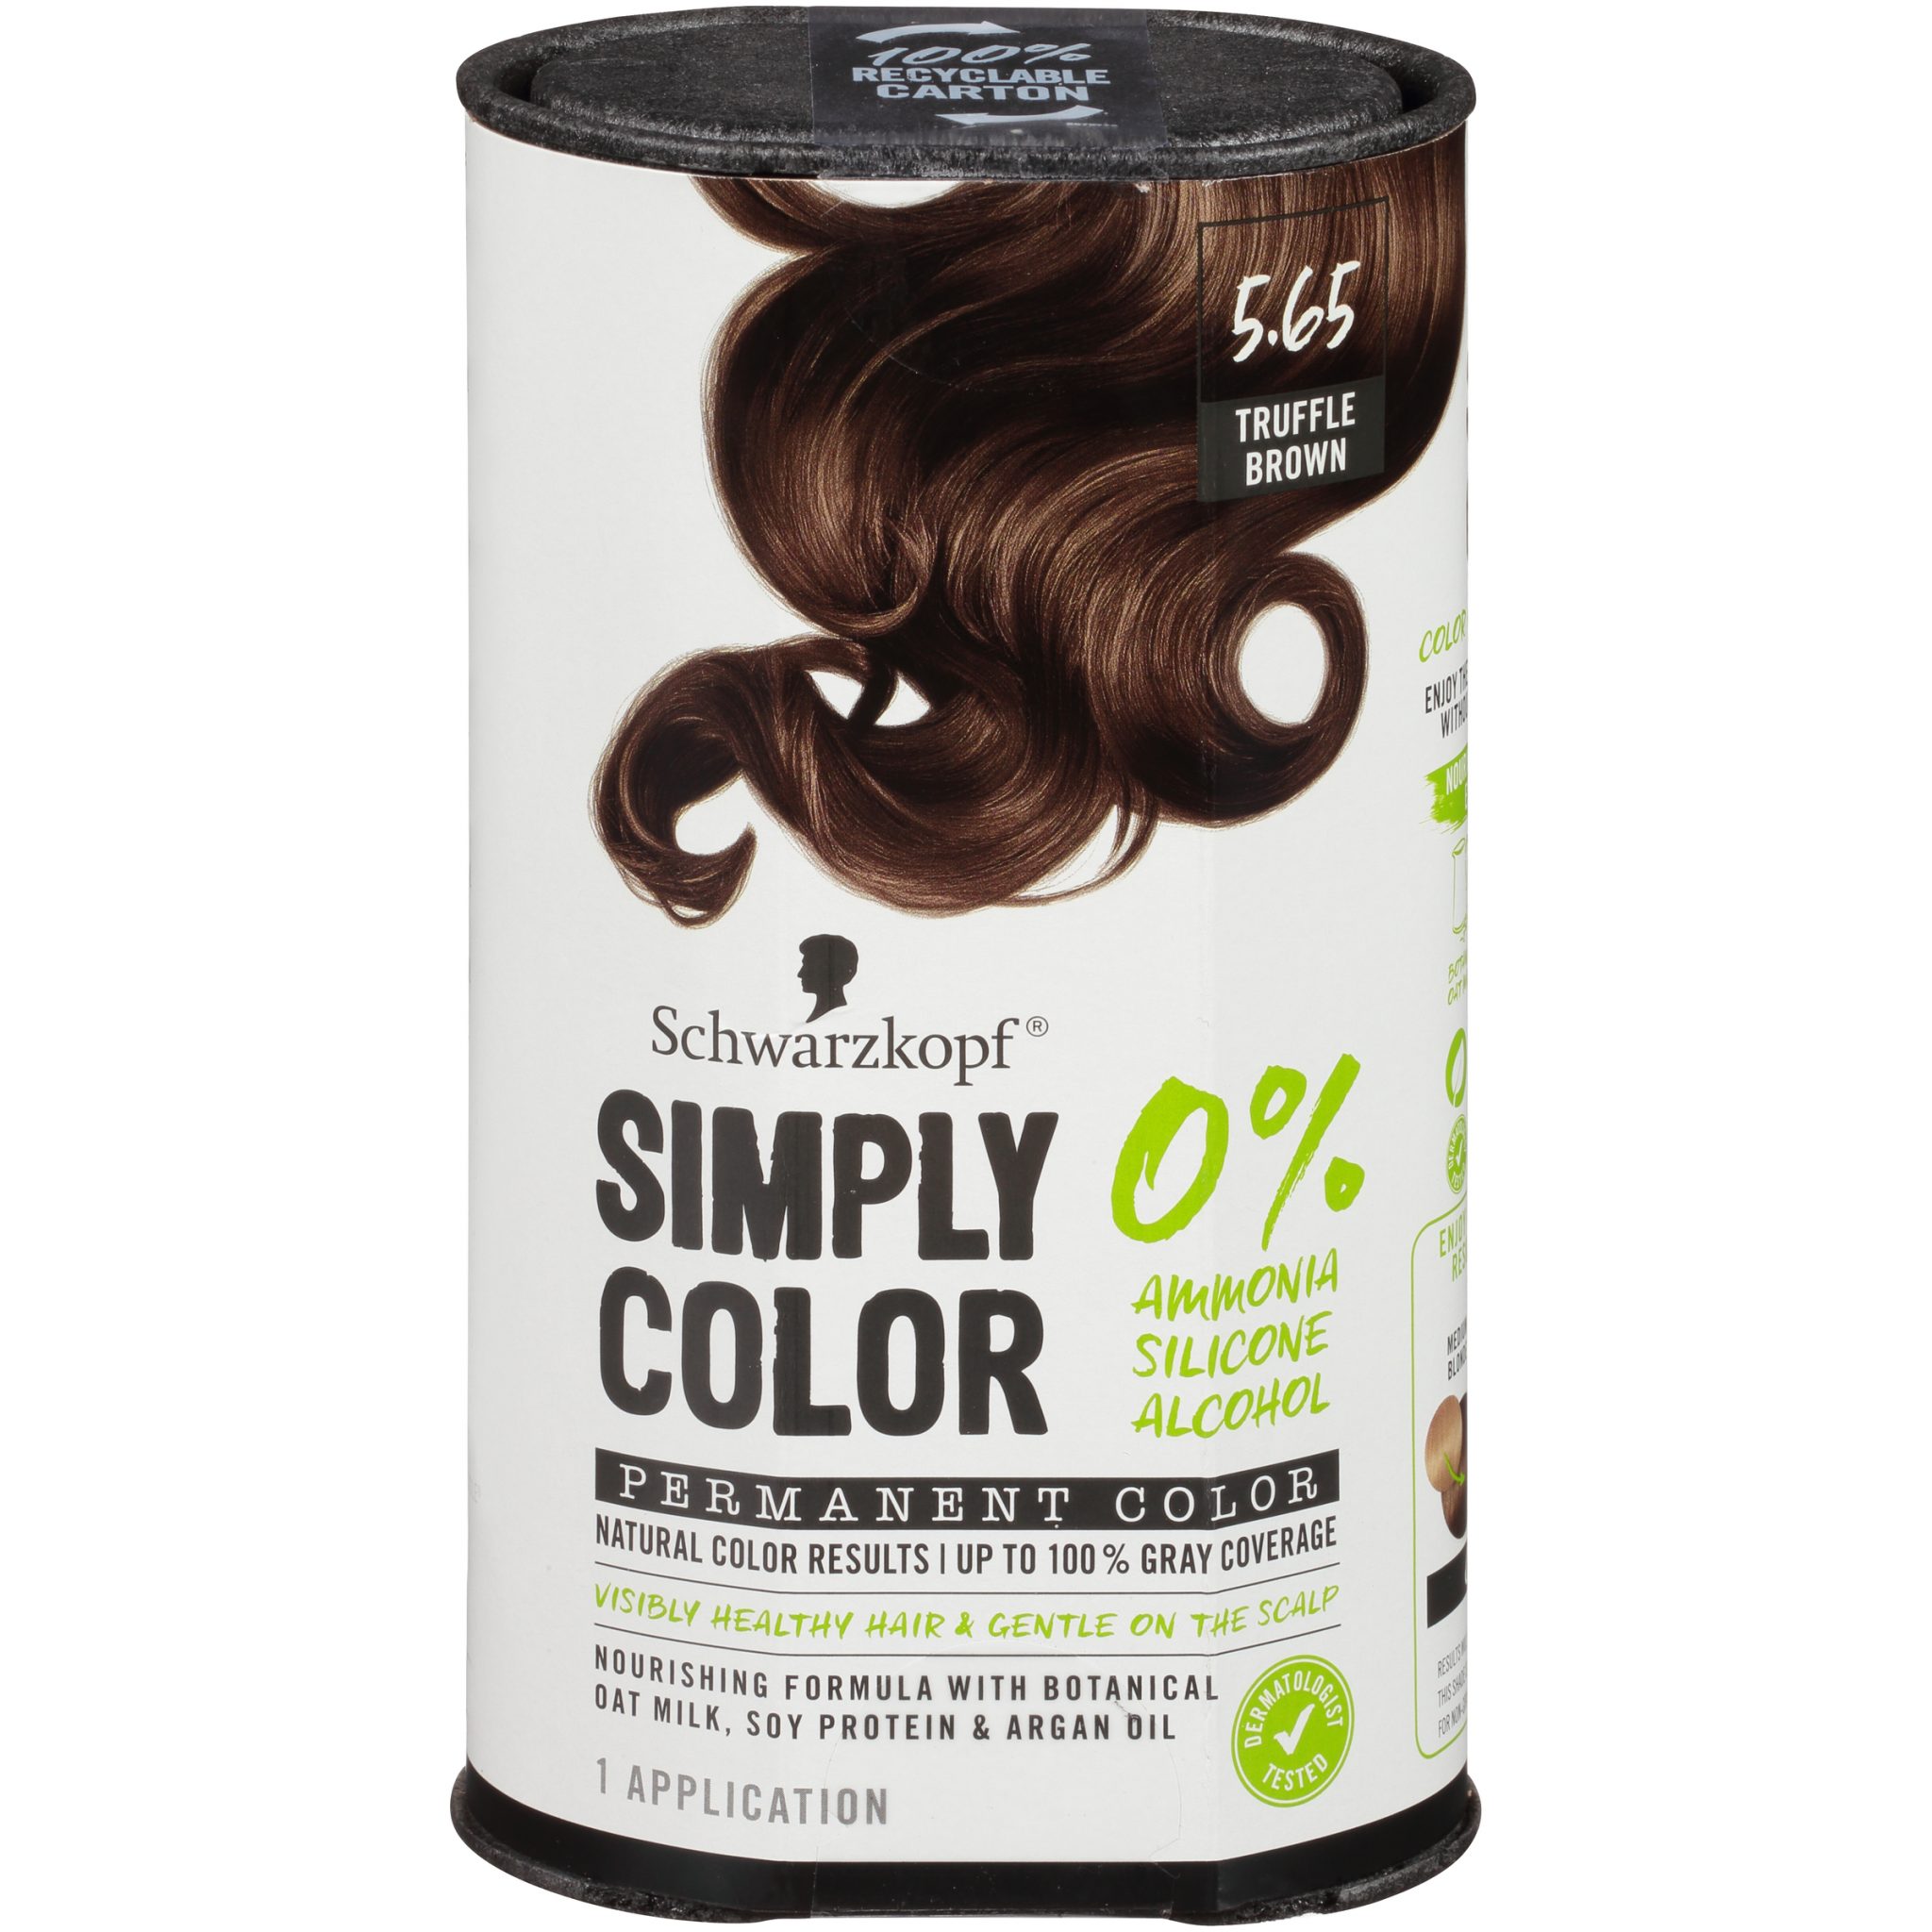 Organics Hair Color Chart